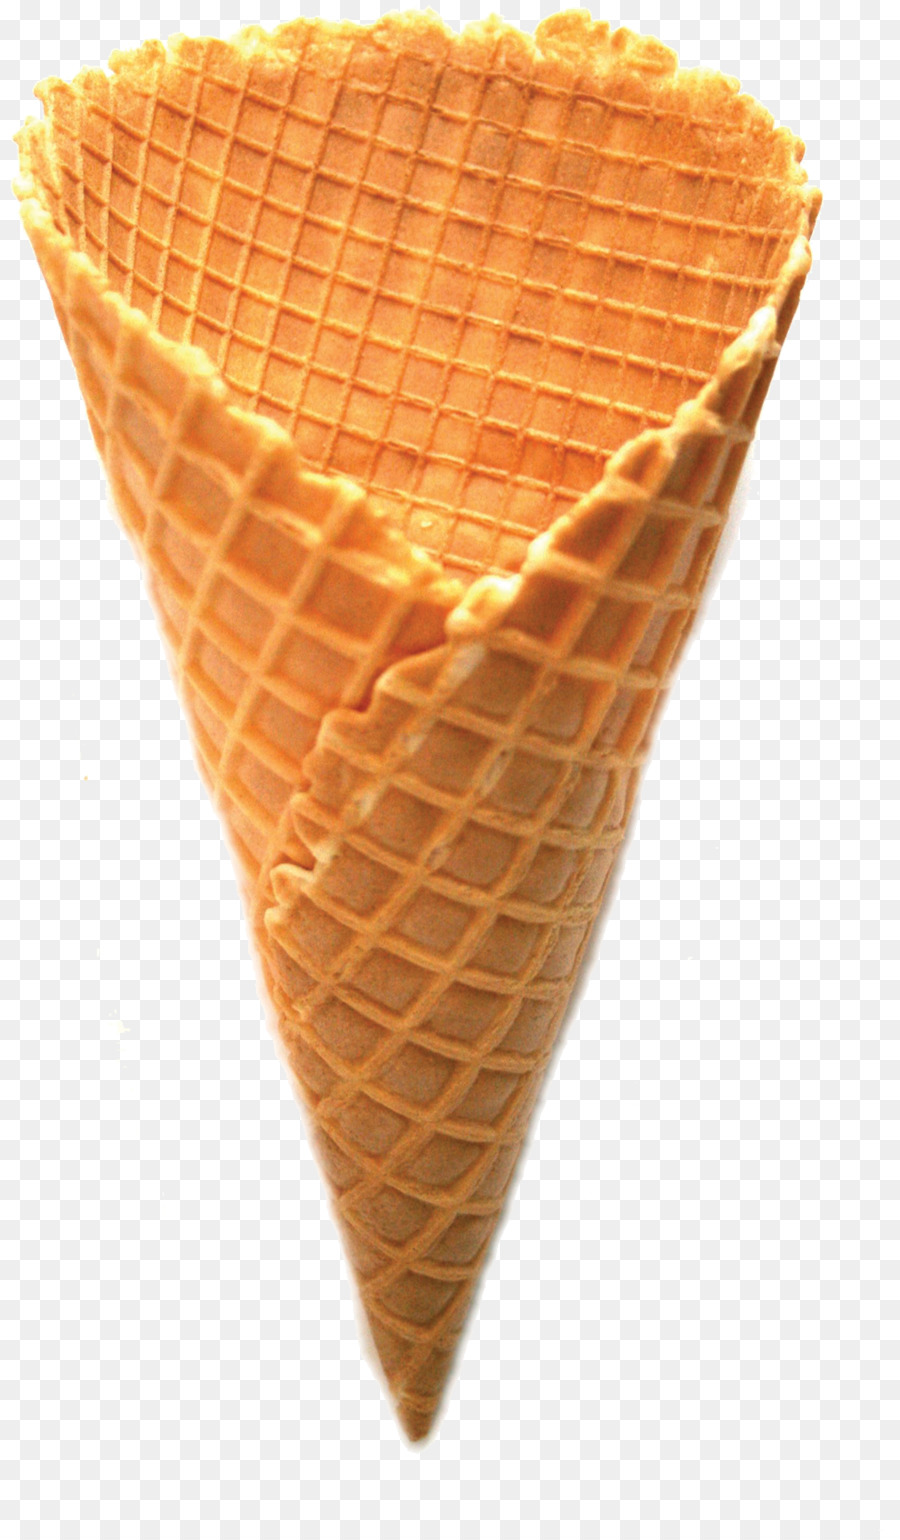 Ice Cream Cone Background clipart